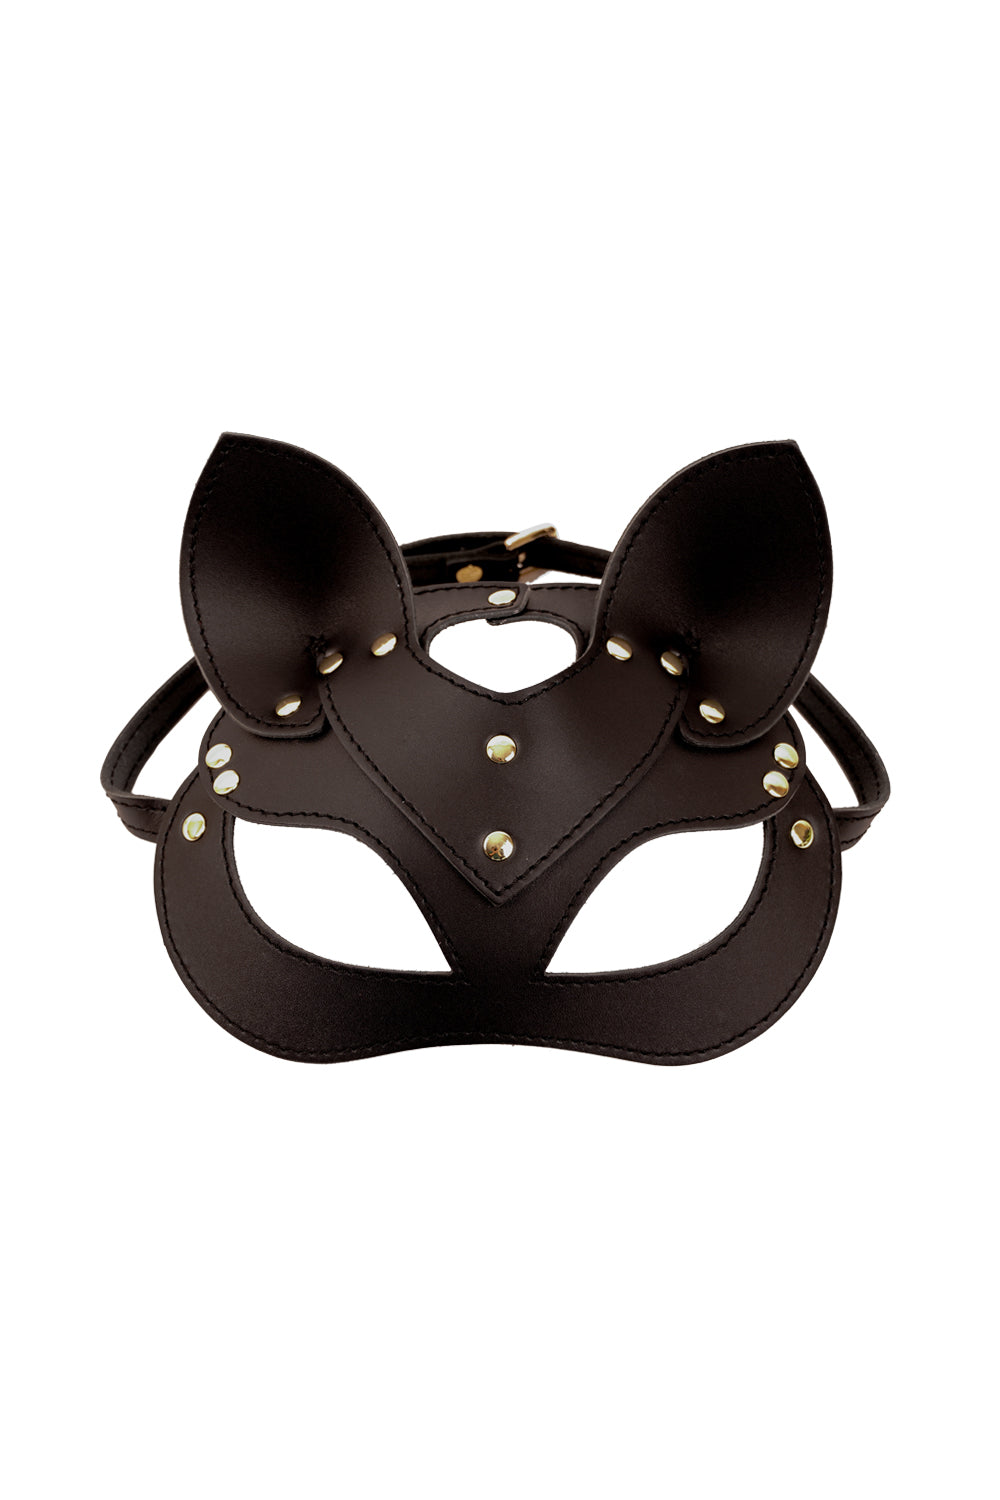 Leather сat mask, kitty fetish mask. Black